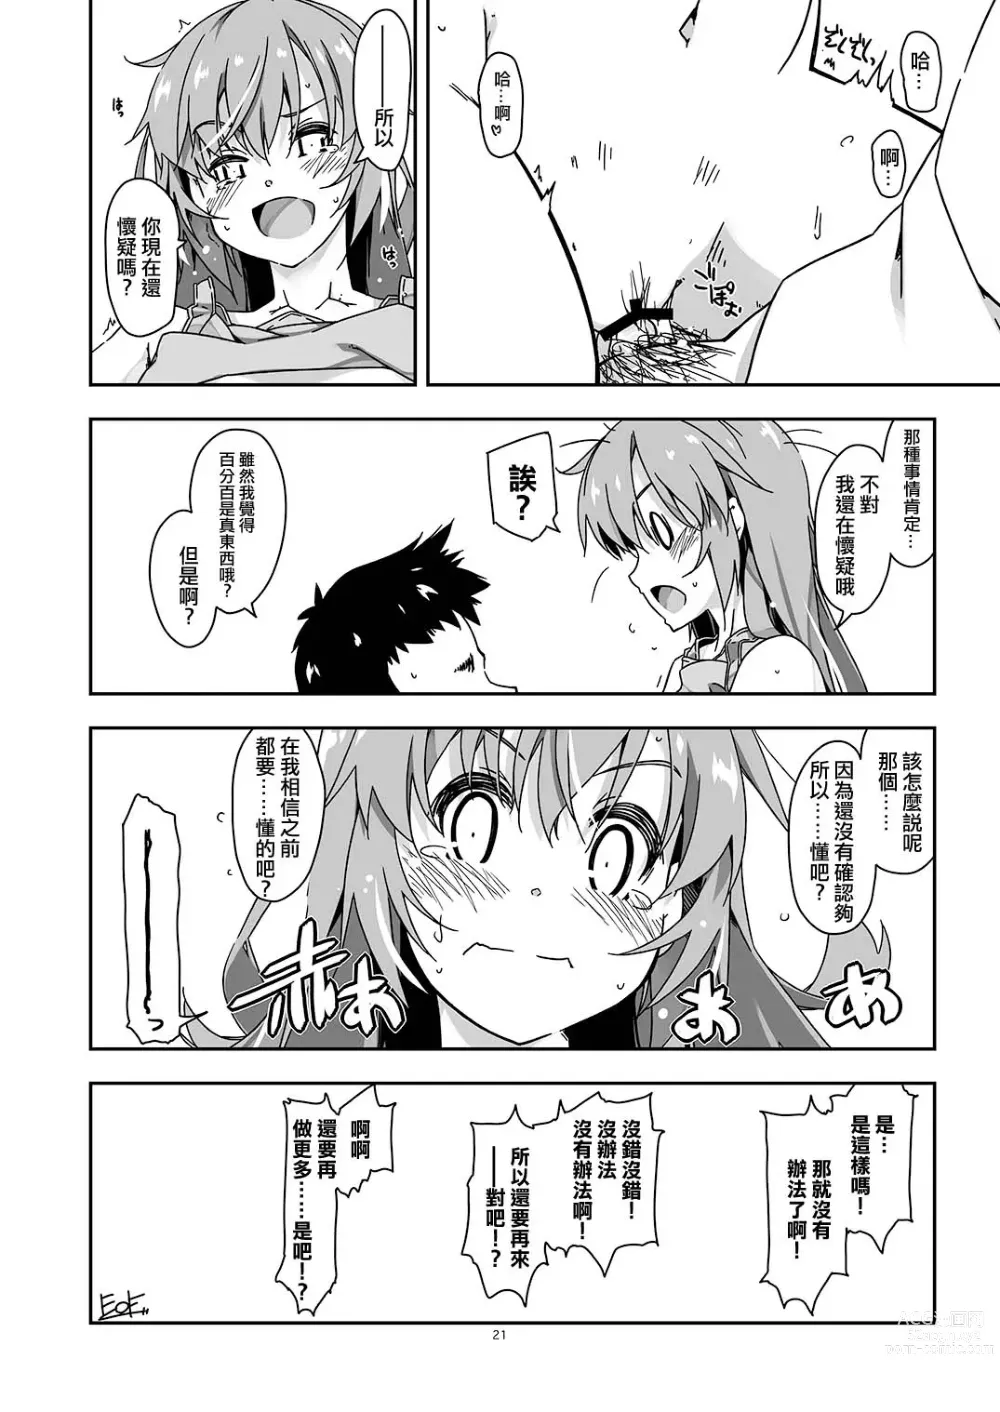 Page 21 of doujinshi Anekibun no Oppai Seichou Kakunin